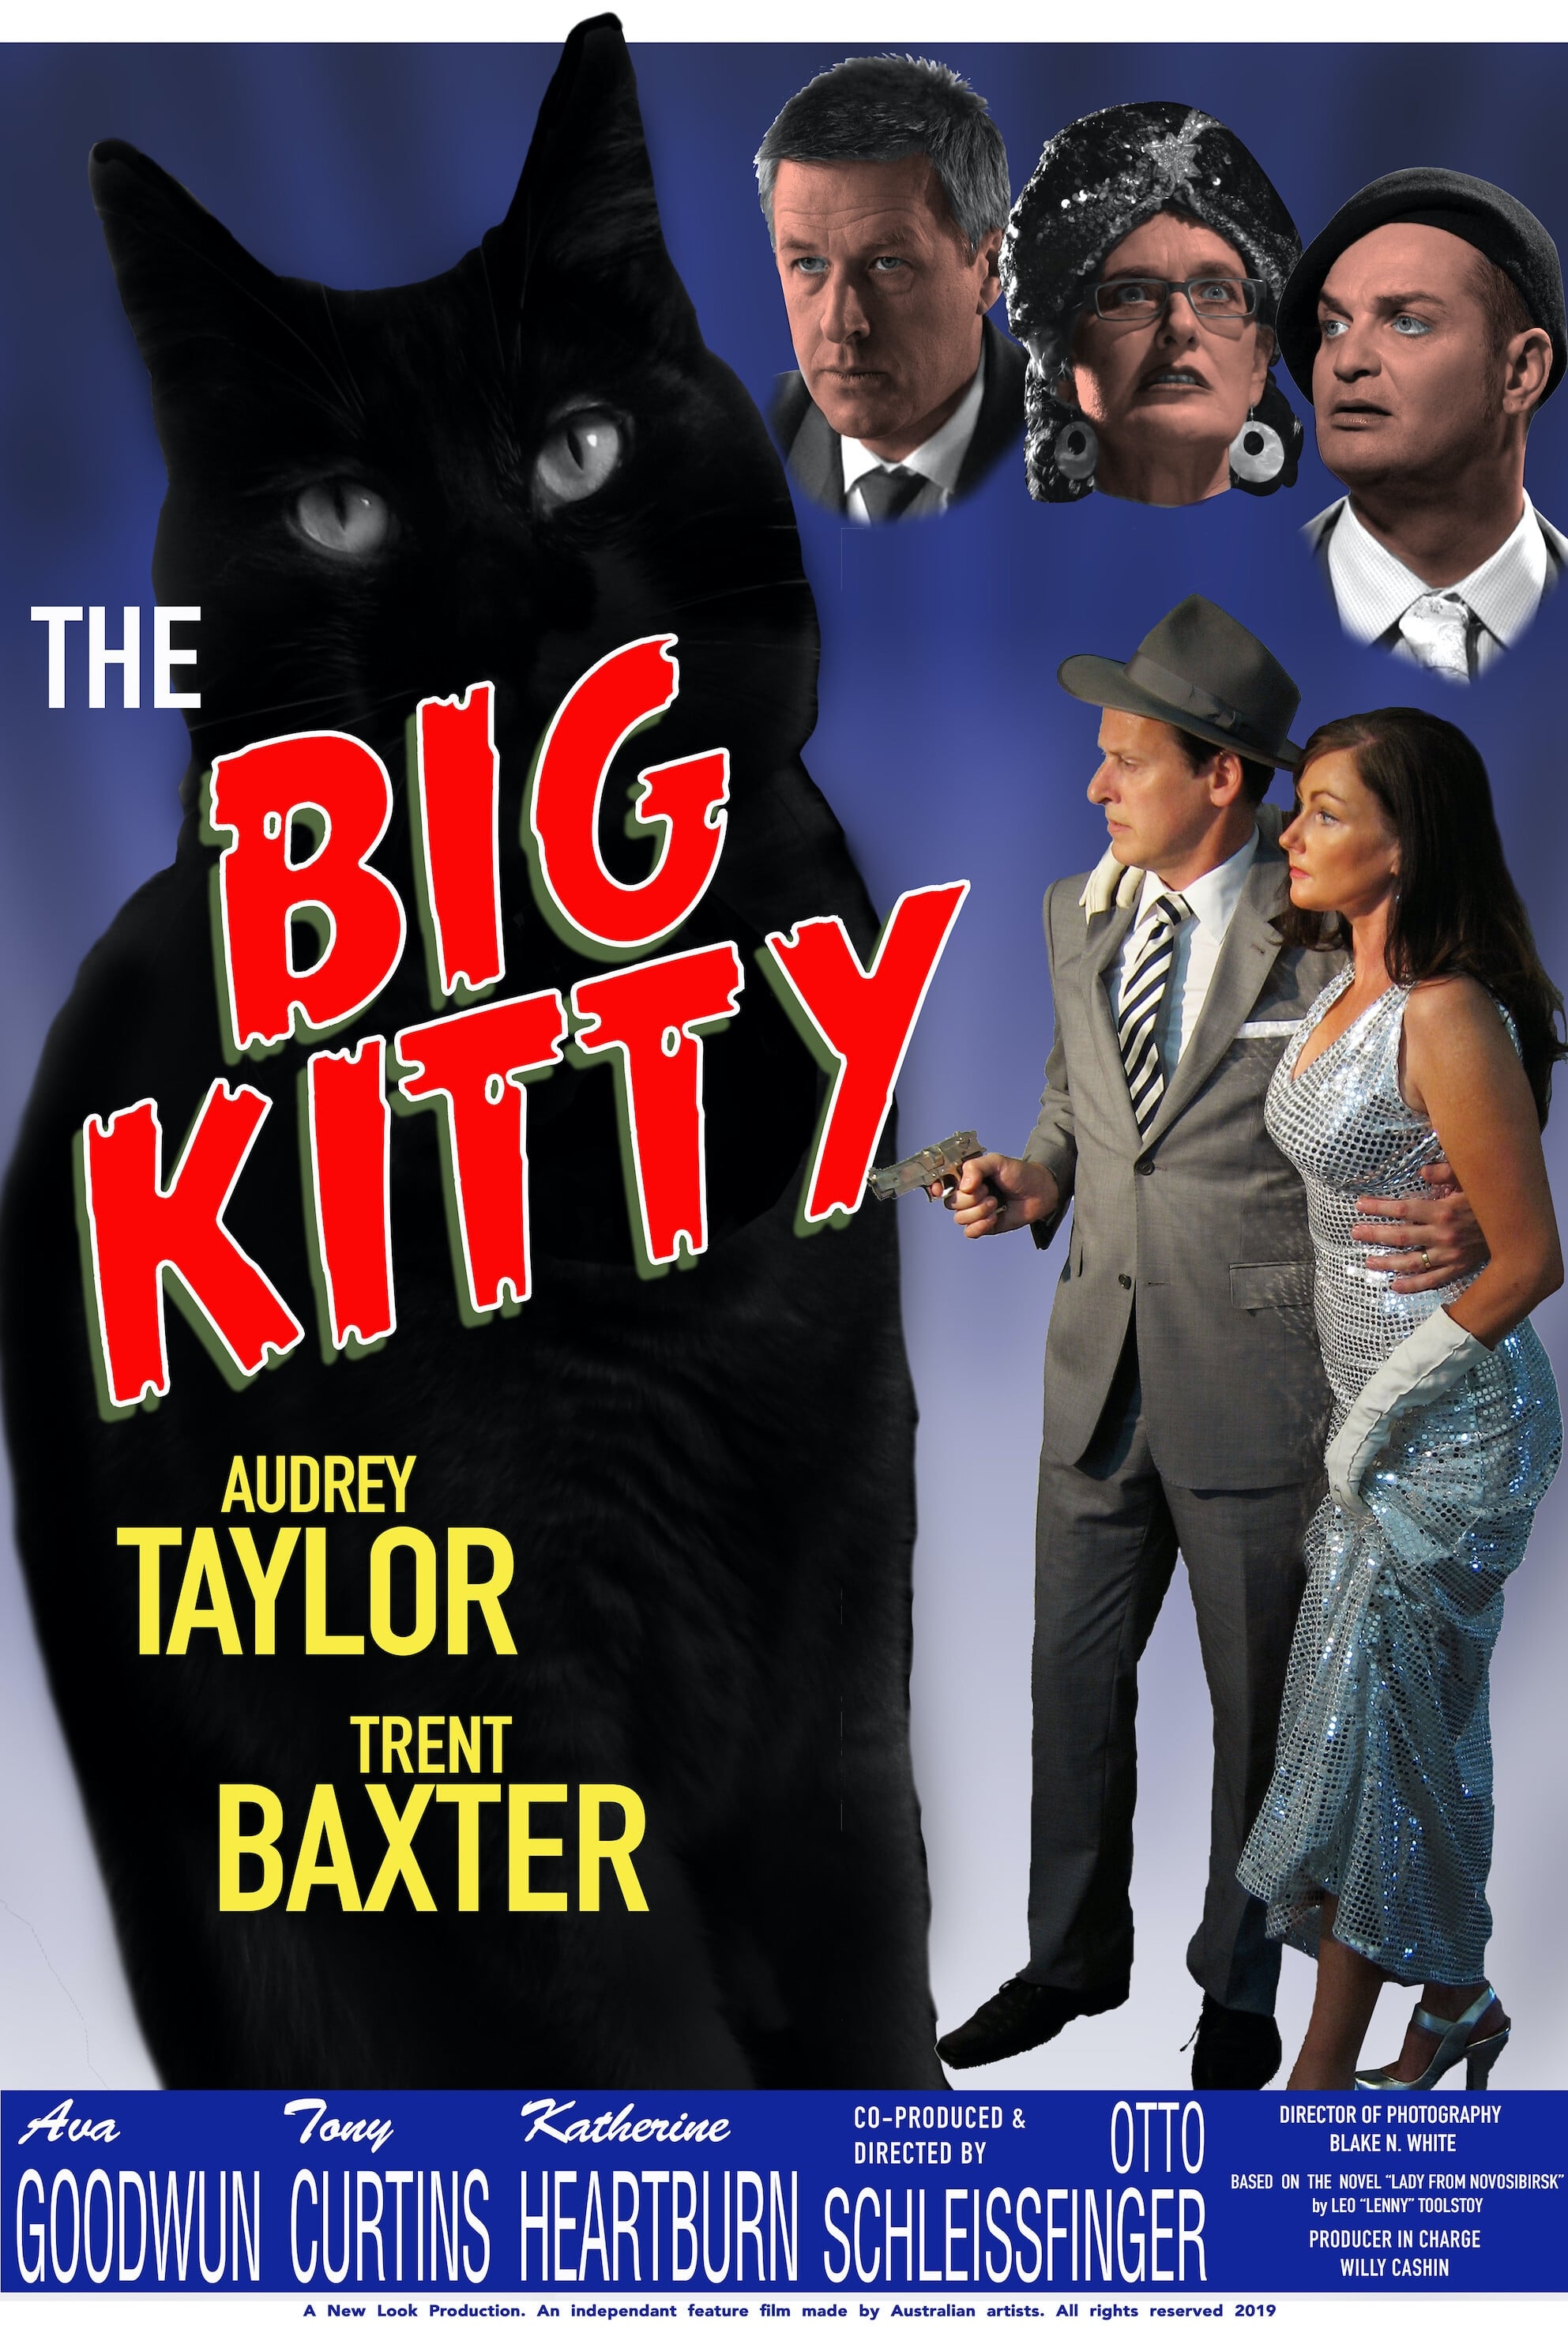 The Big Kitty